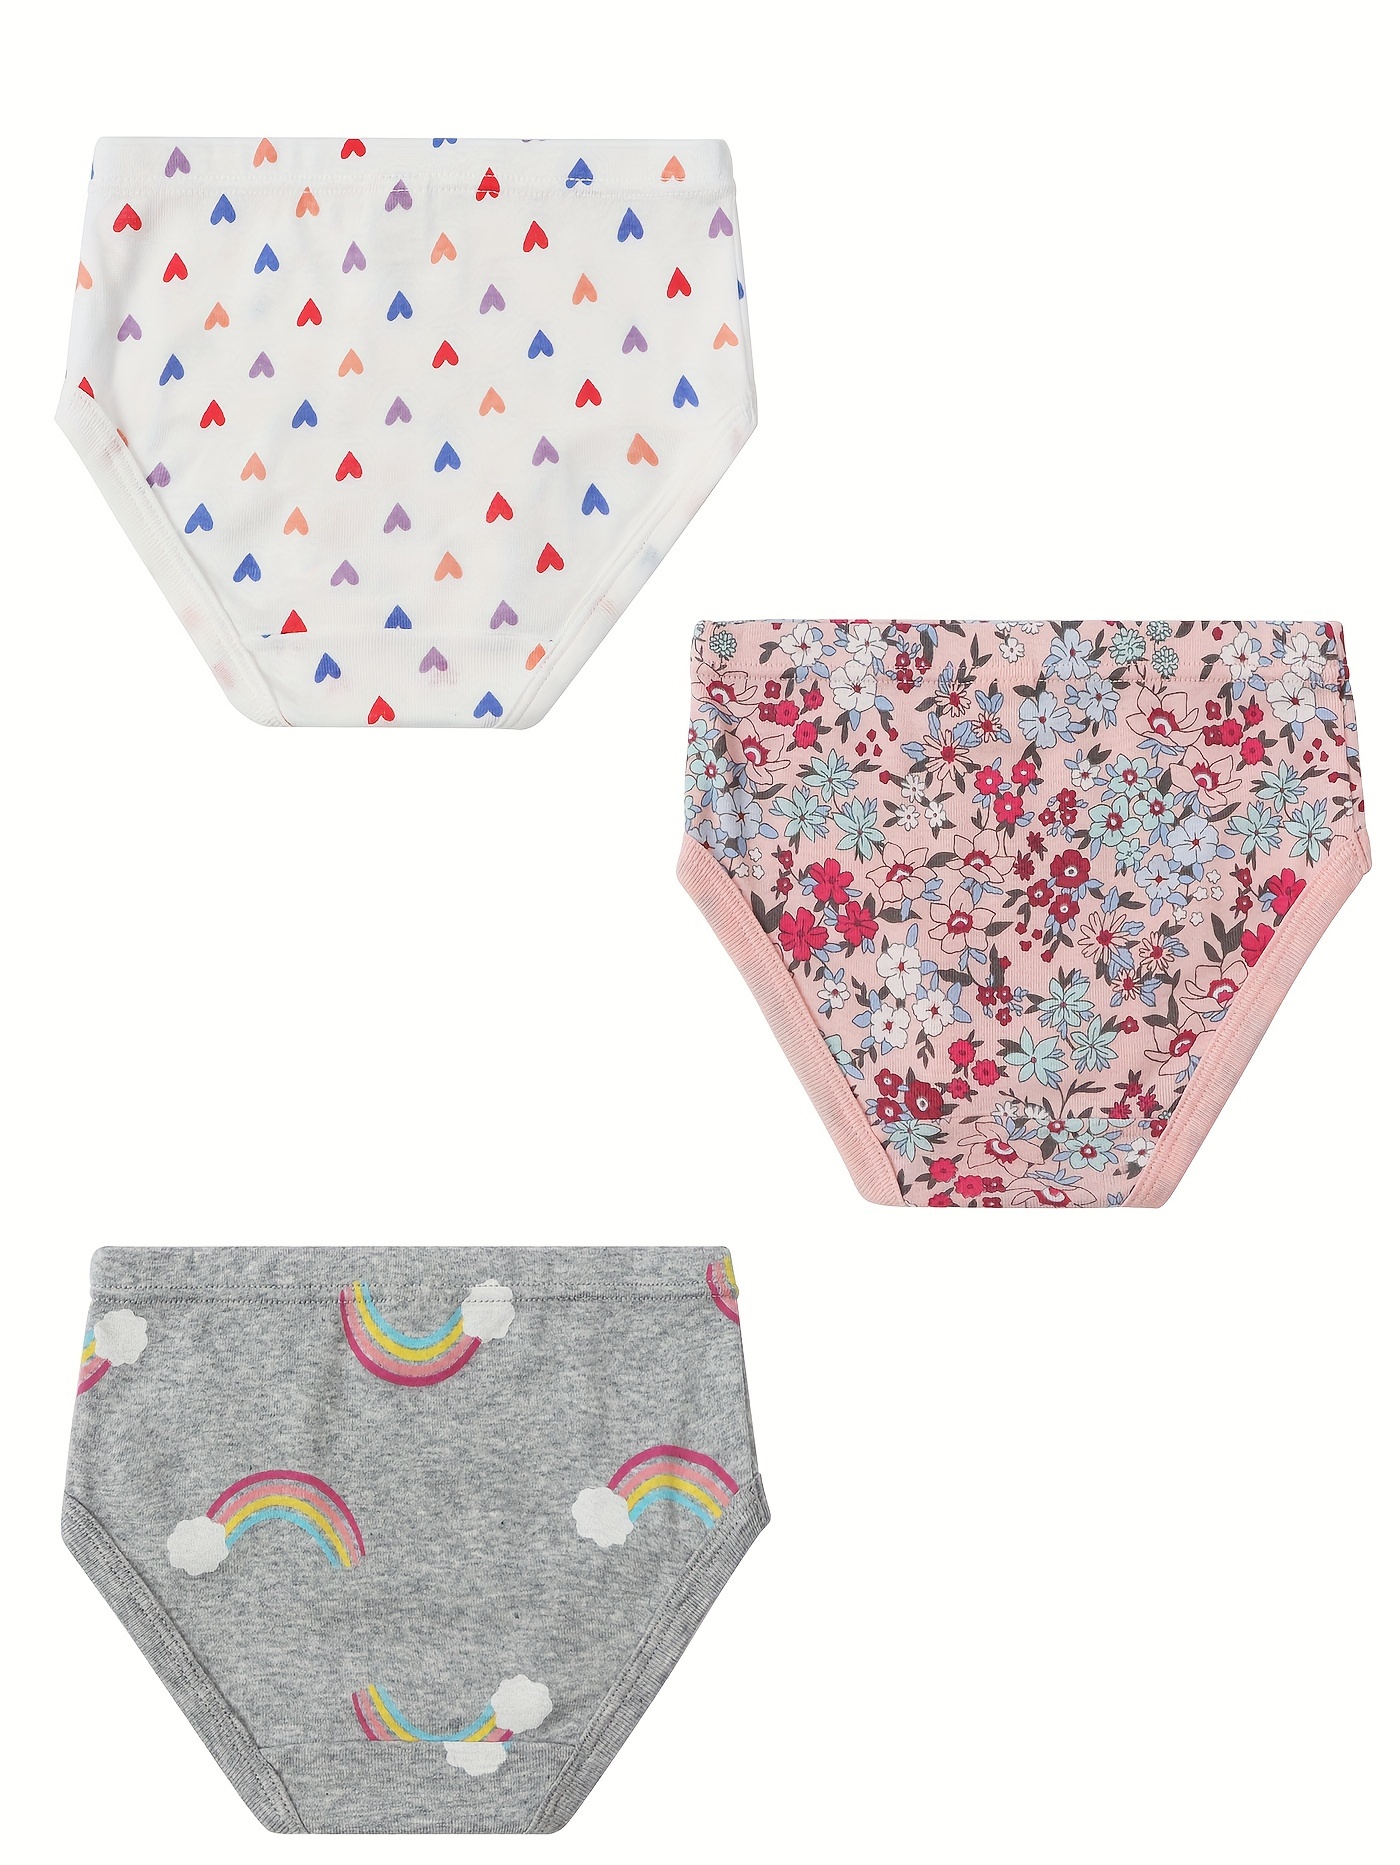  Little Girl Cotton Underwear Toddler Girls Panties Soft Briefs  Size 4T